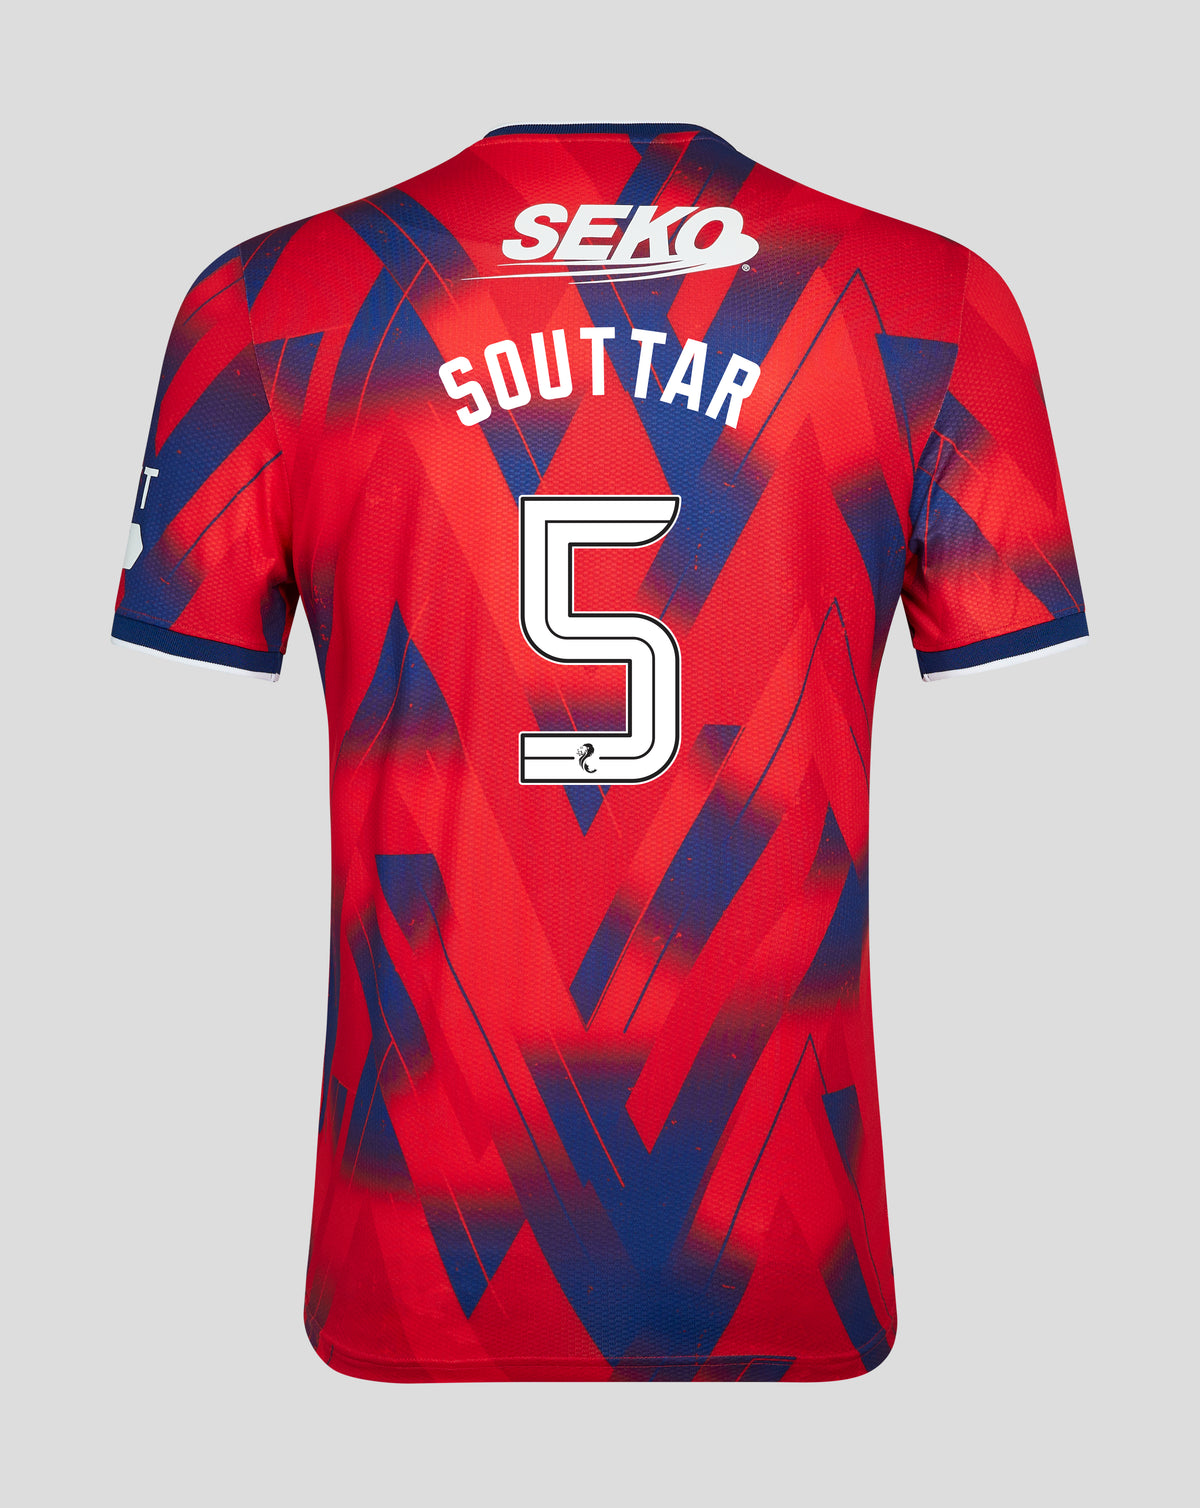 Souttar - Fourth Kit